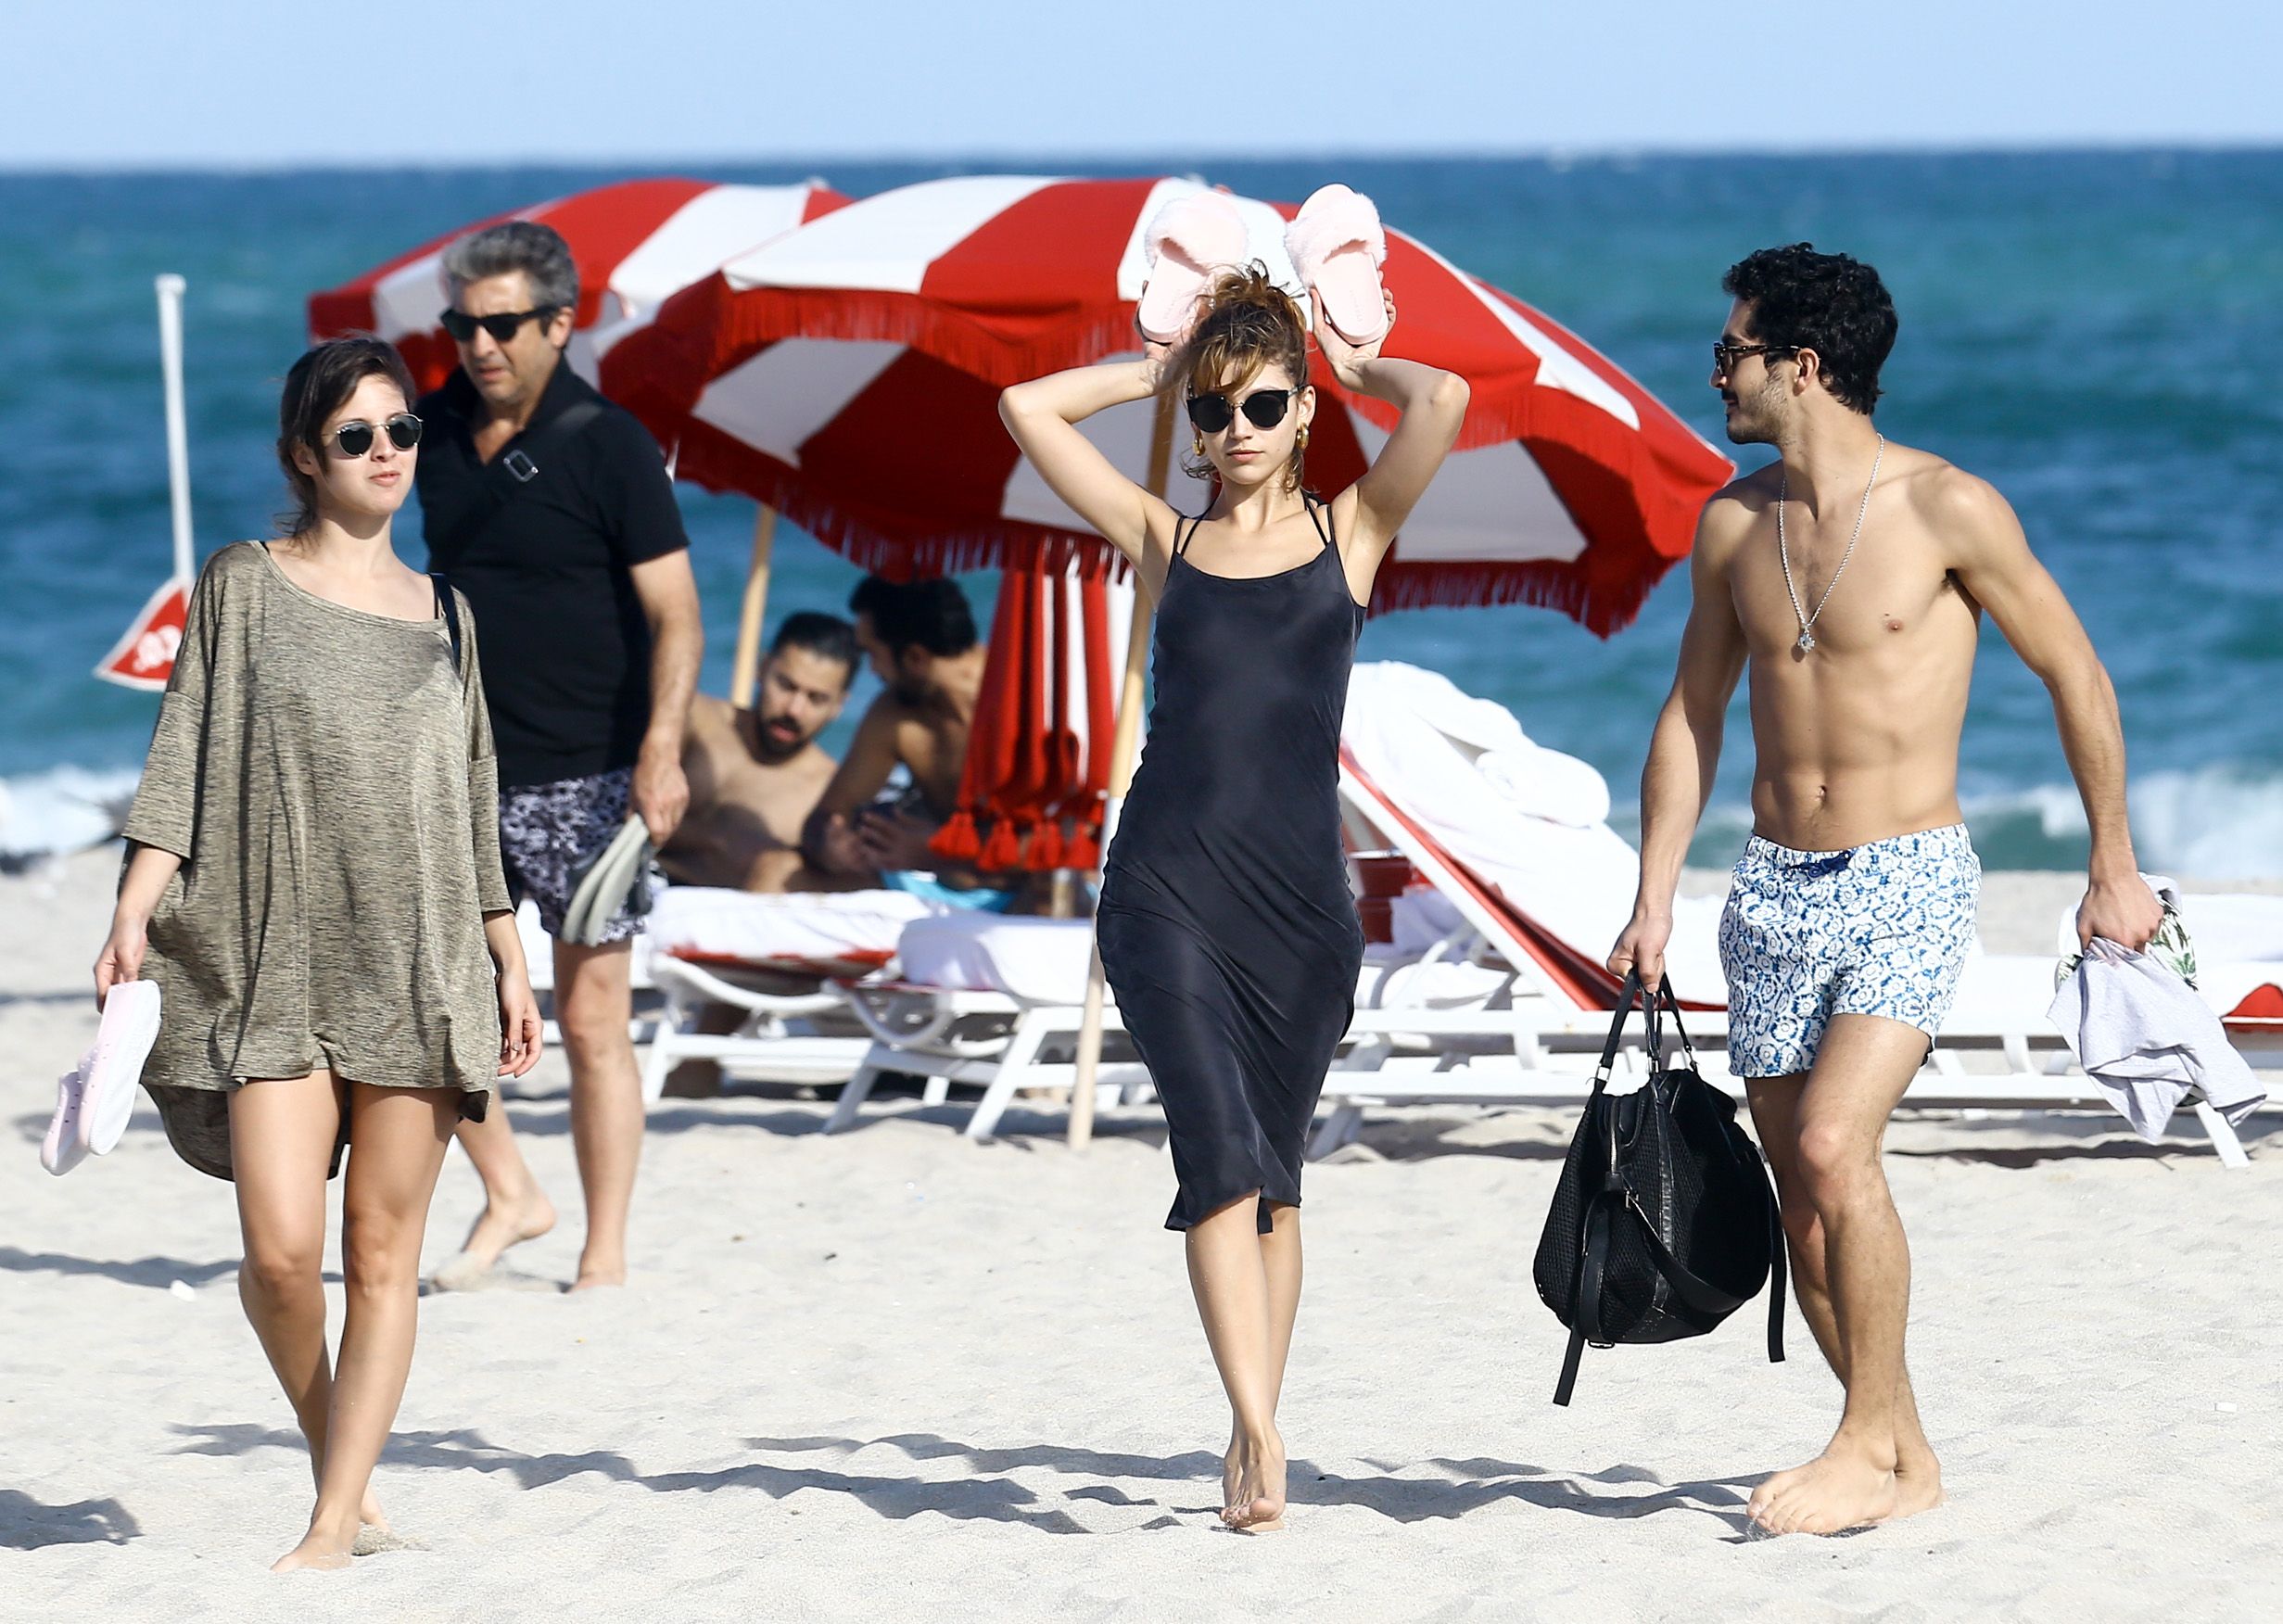 Ursula Corbero & Chino Darin Catch Some Rays on the Beach in Miami (30 Photos)